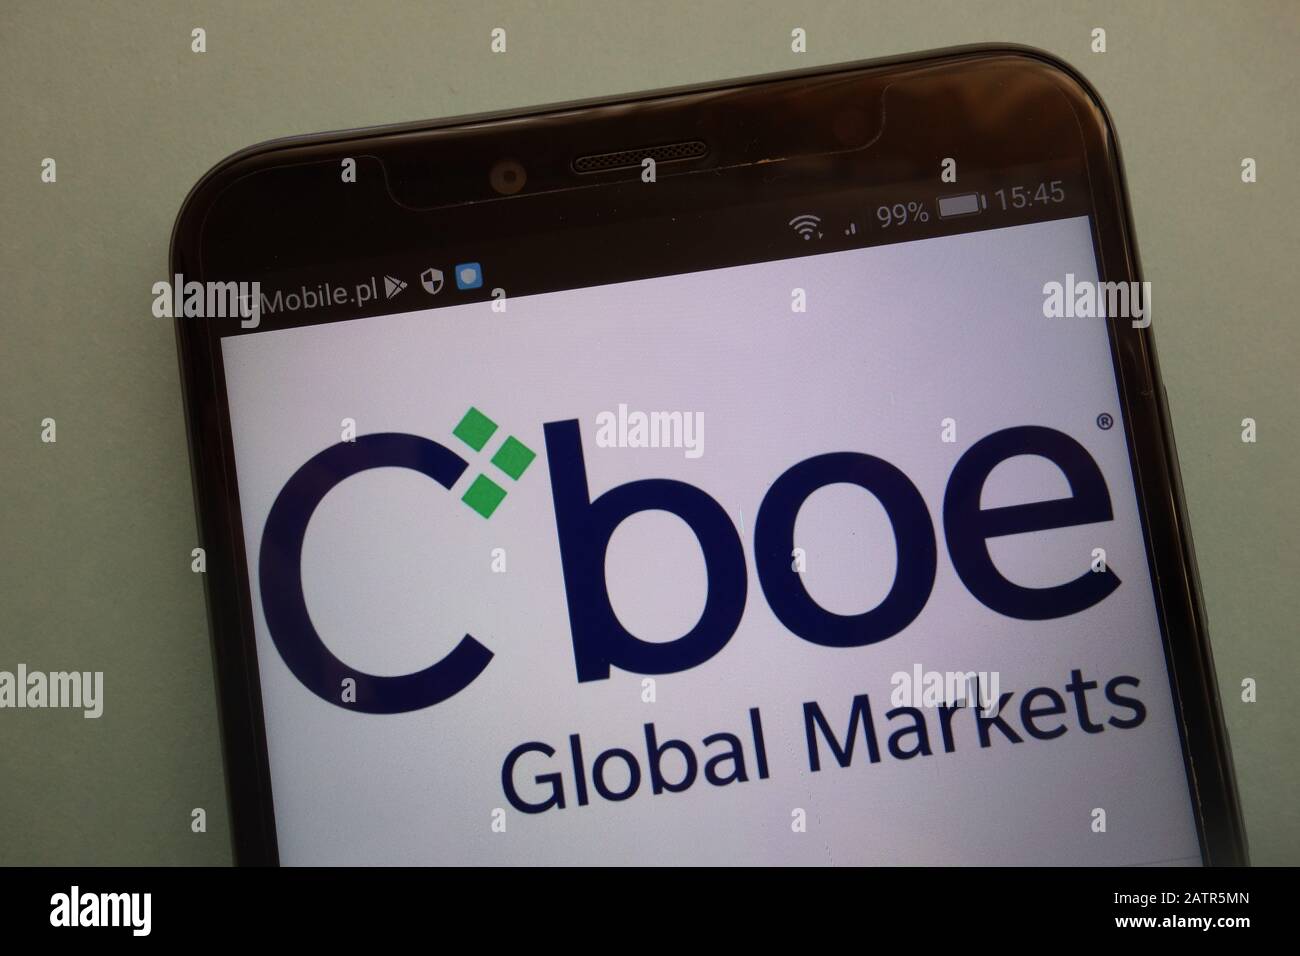 Cboe Global Markets logo on smartphone Stock Photo